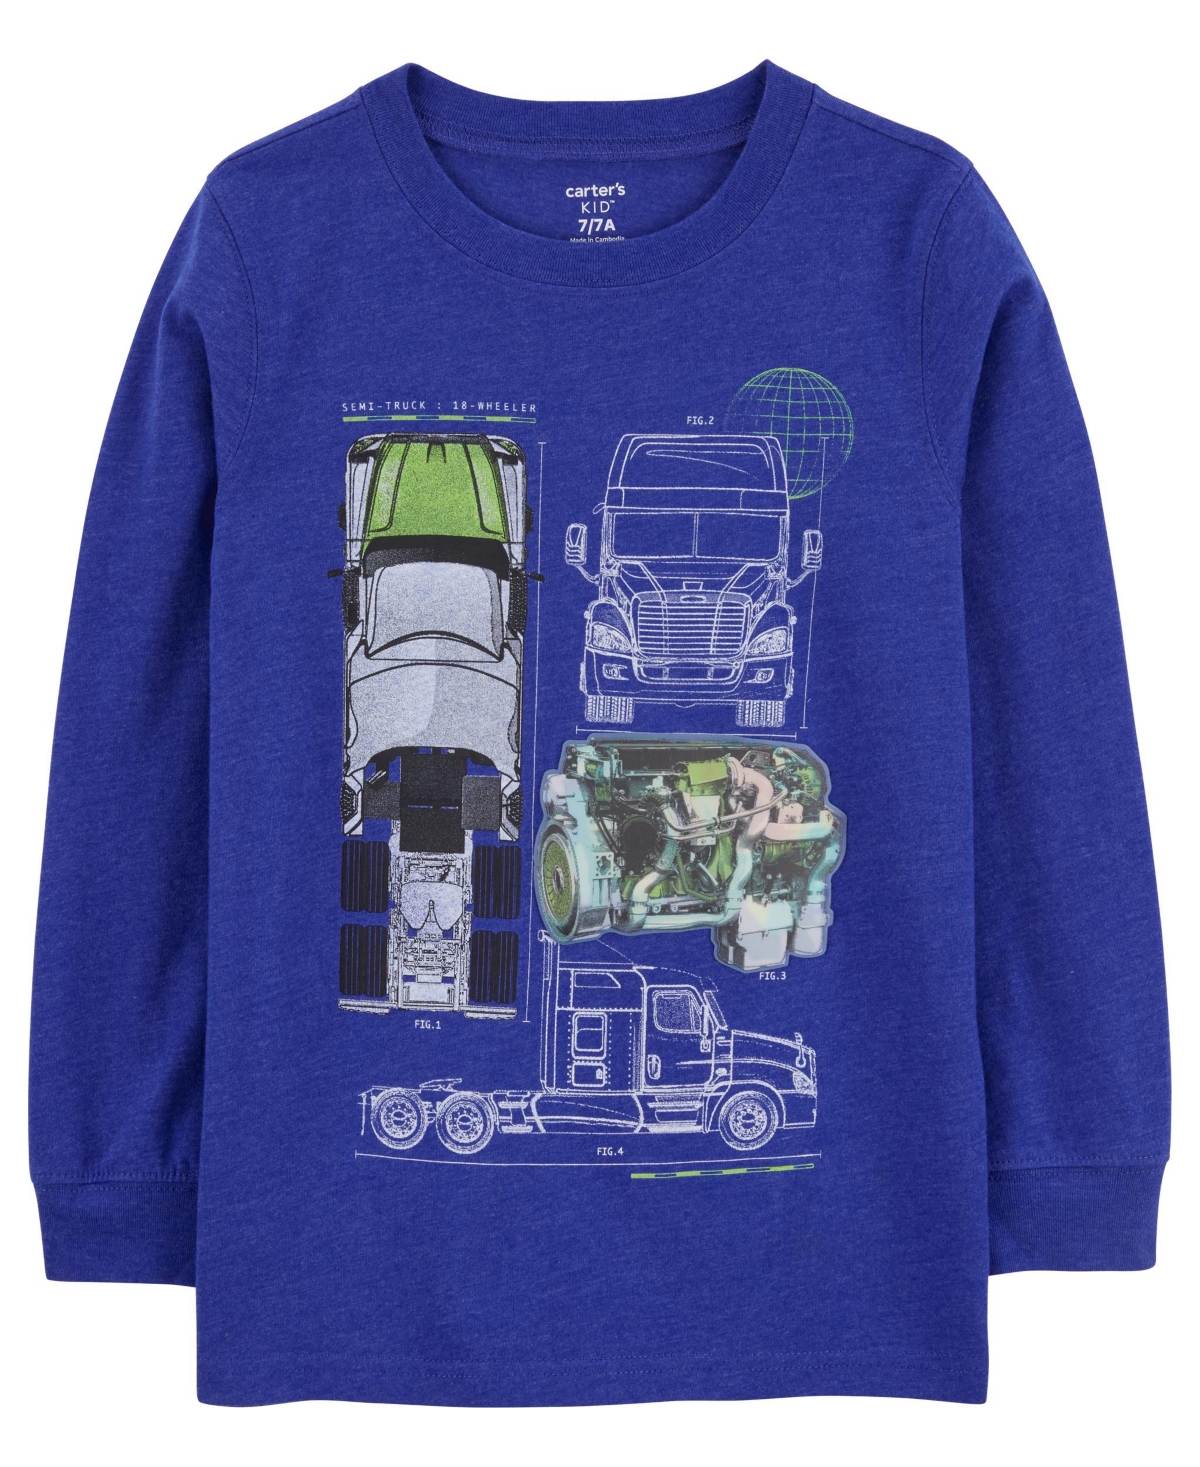 Carter's Kids' Little Boys Action Racing Jersey T-shirt In Blue